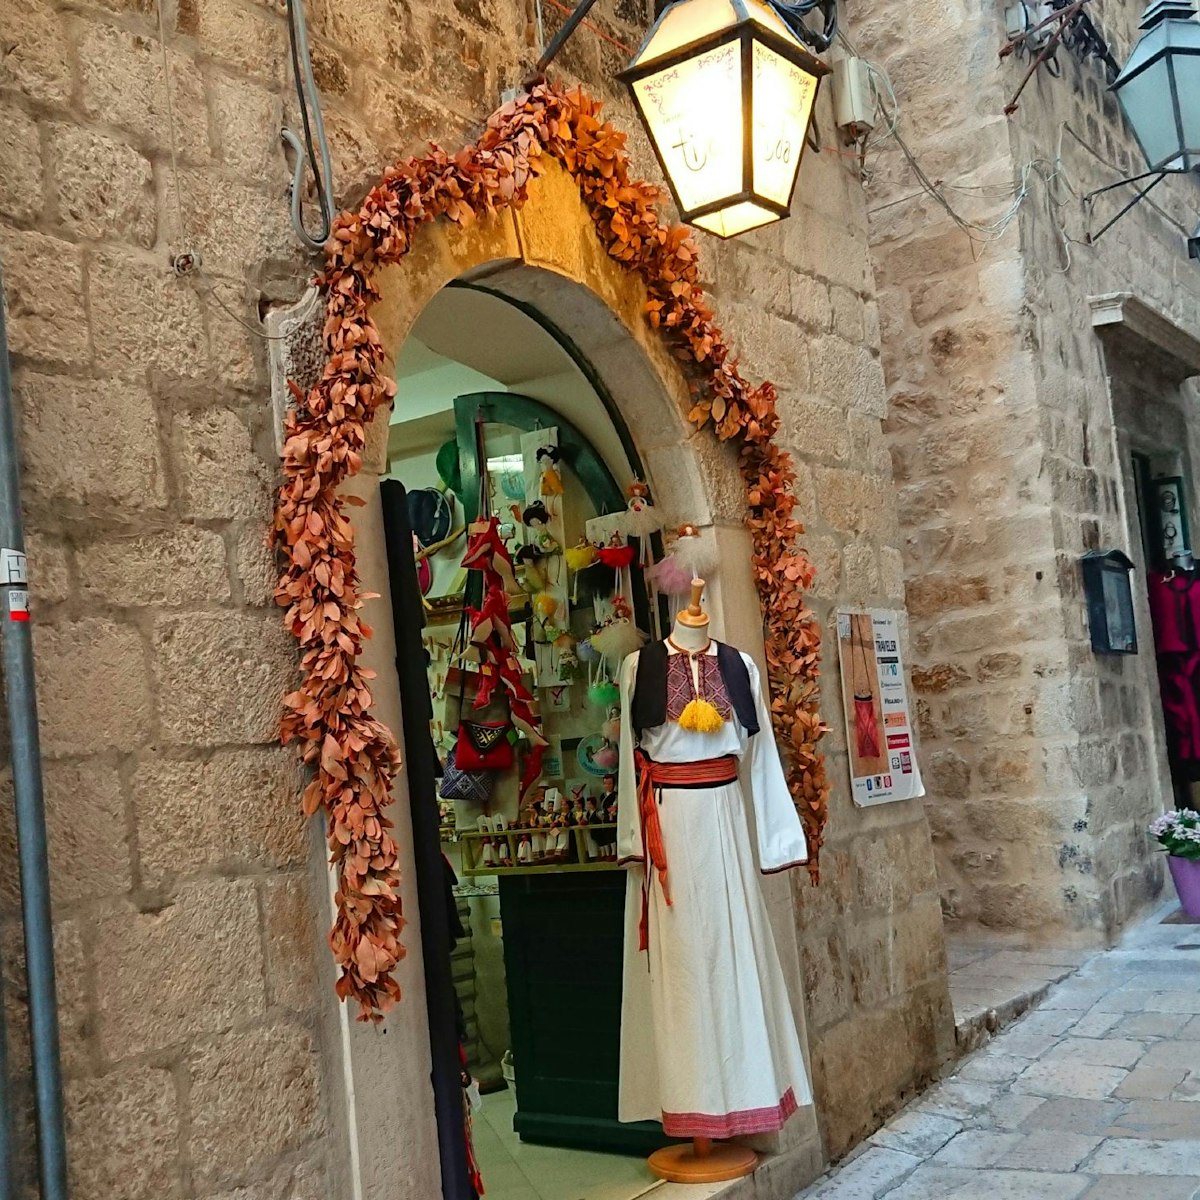 Tilda Dubrovnik entrance is easily spotted in Zlatarska street